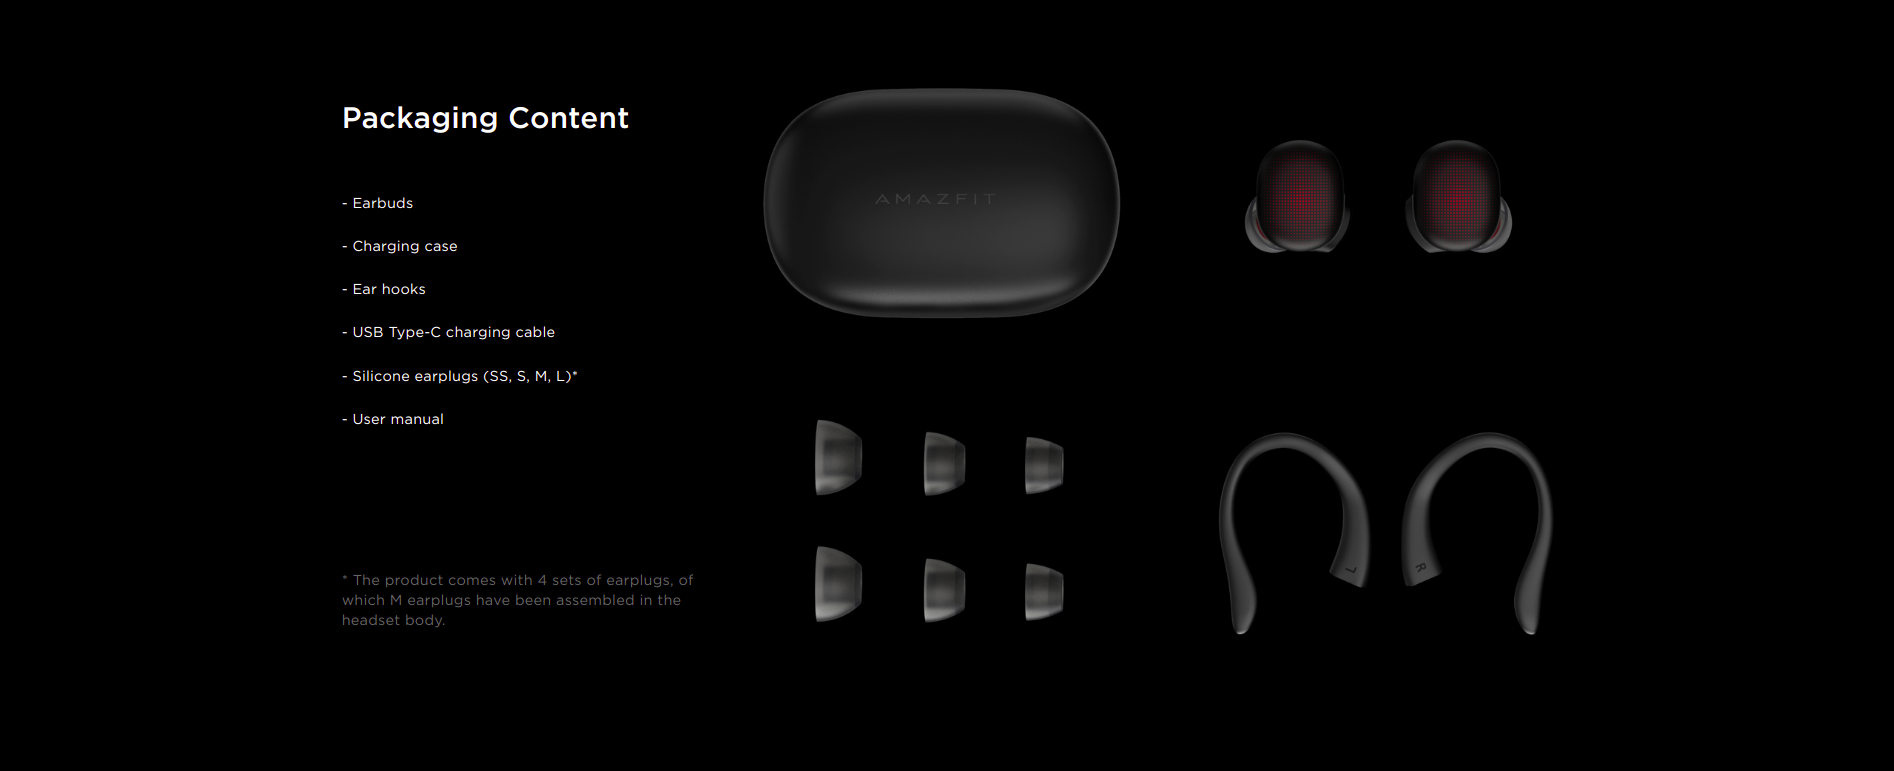 Amazfit PowerBuds Truly Wireless Bluetooth in Ear Earbuds